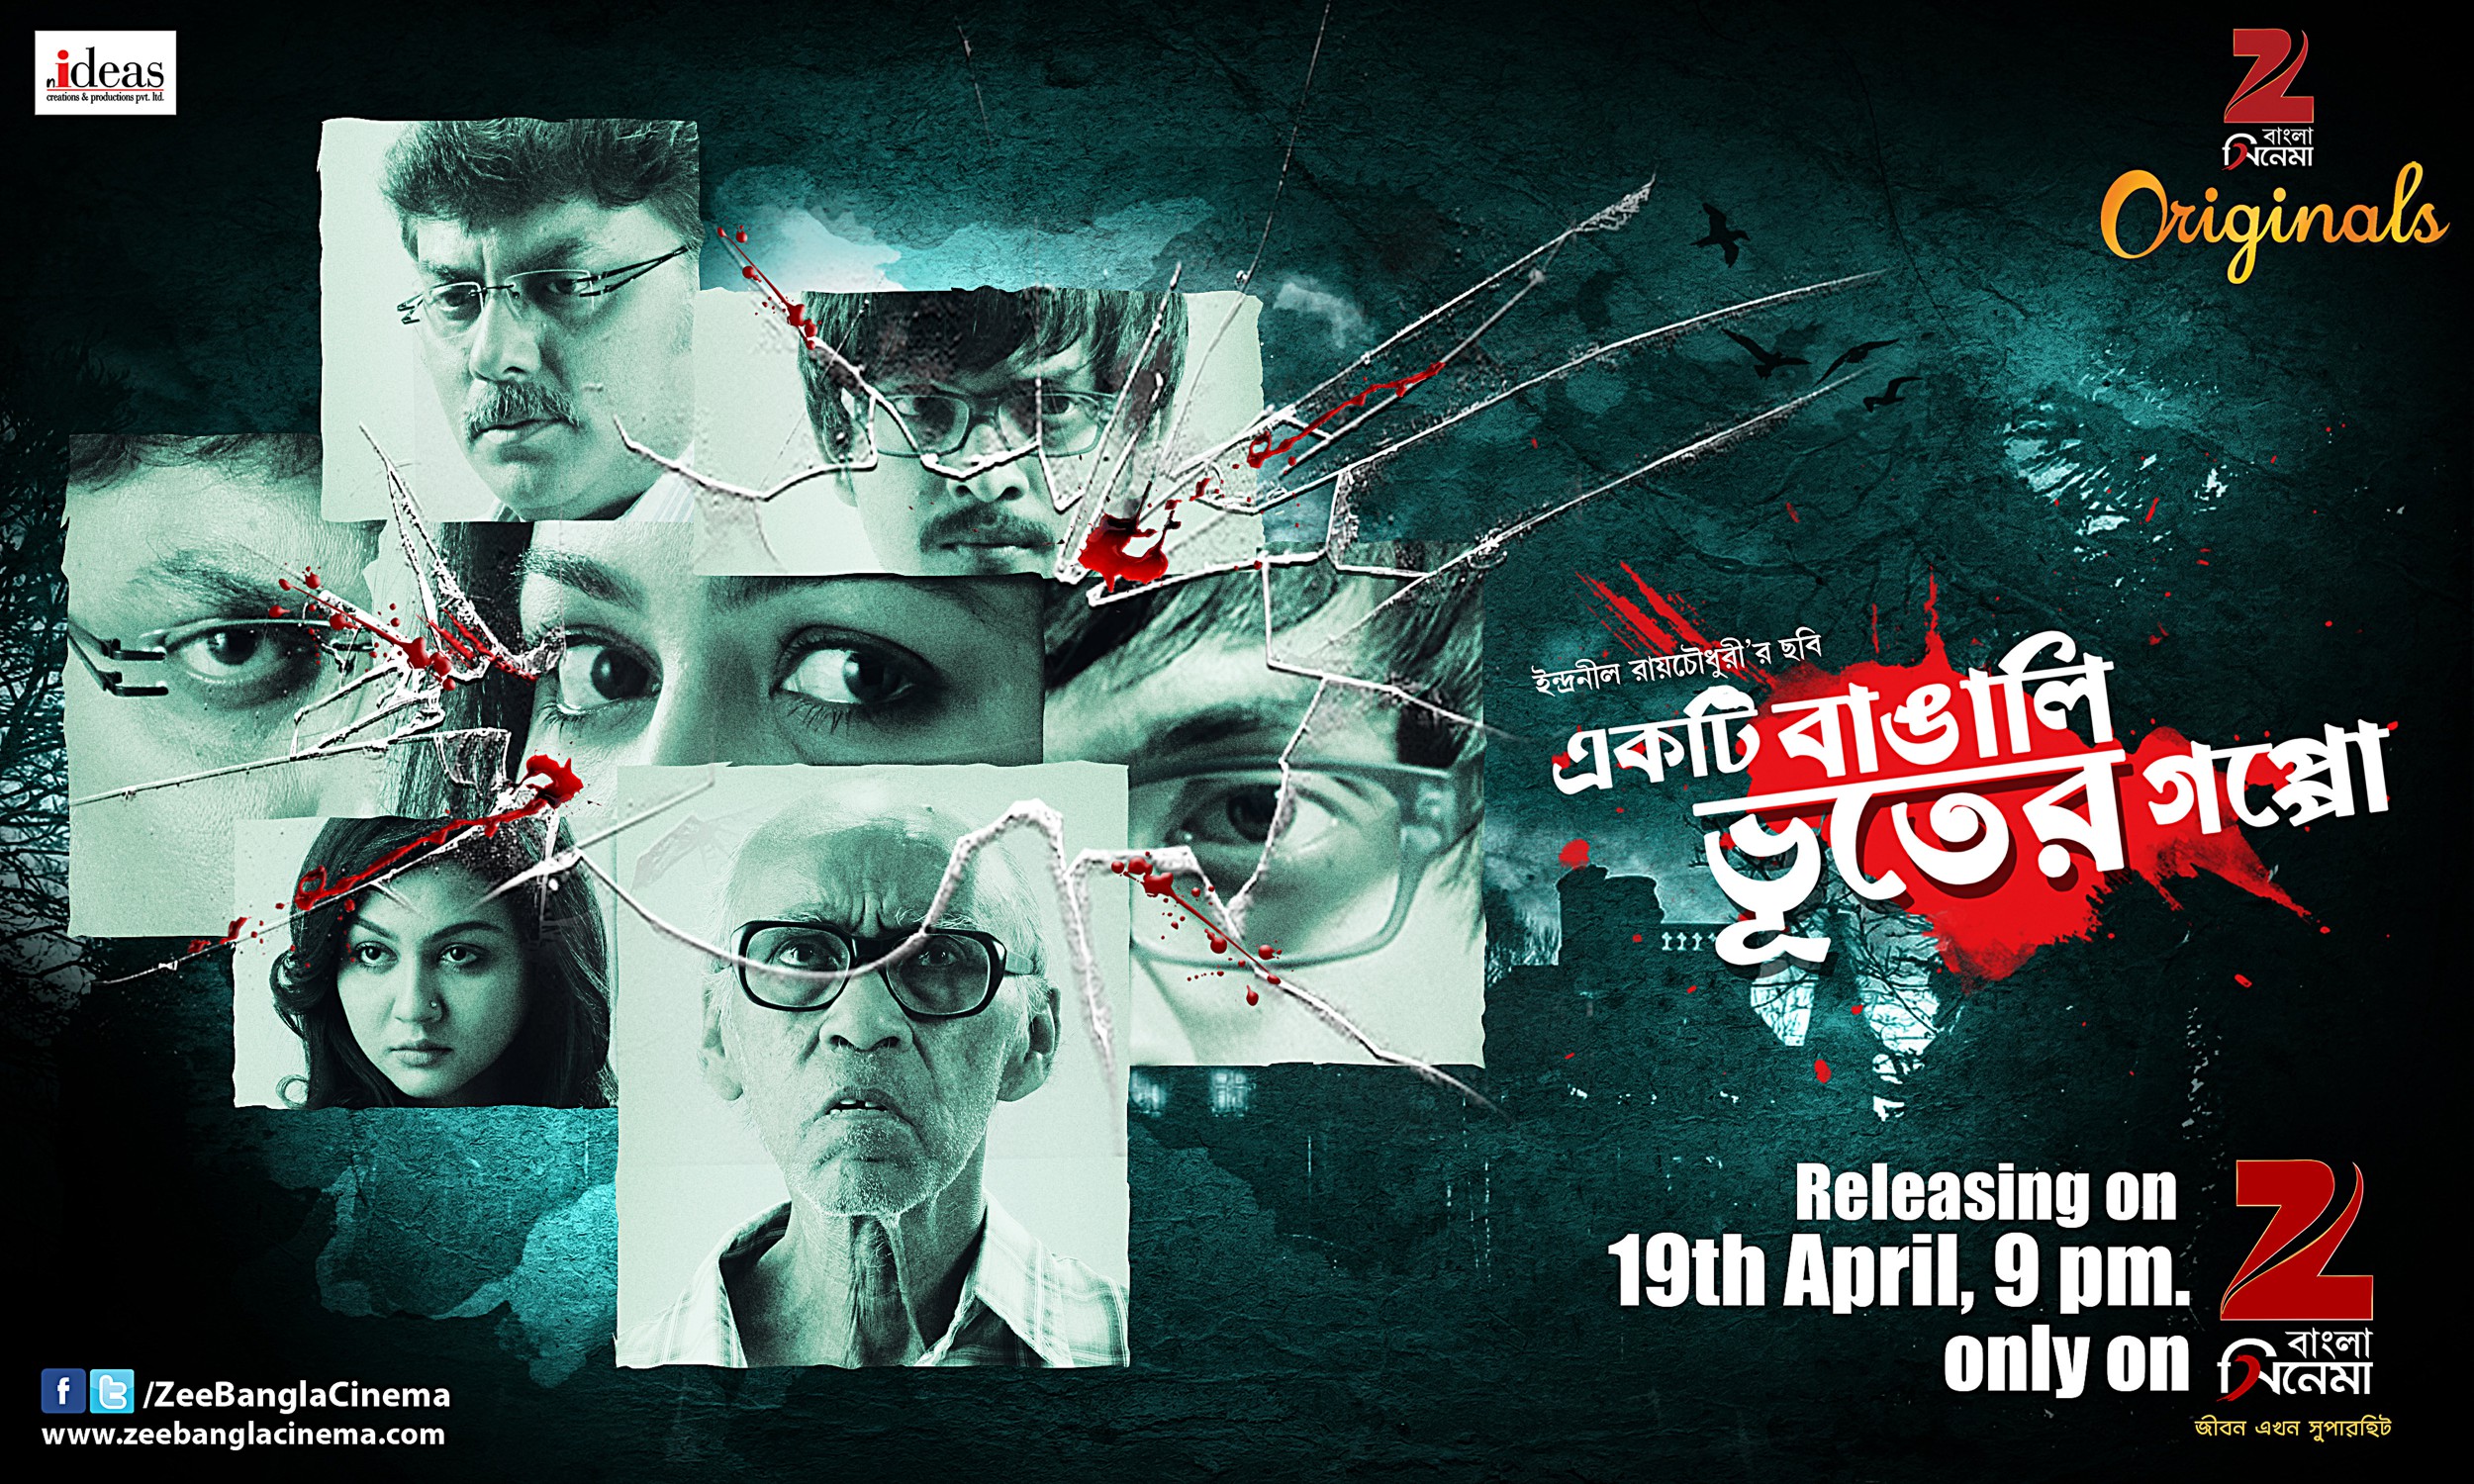 Mega Sized TV Poster Image for Ekti Bangali Bhooter Golpo 